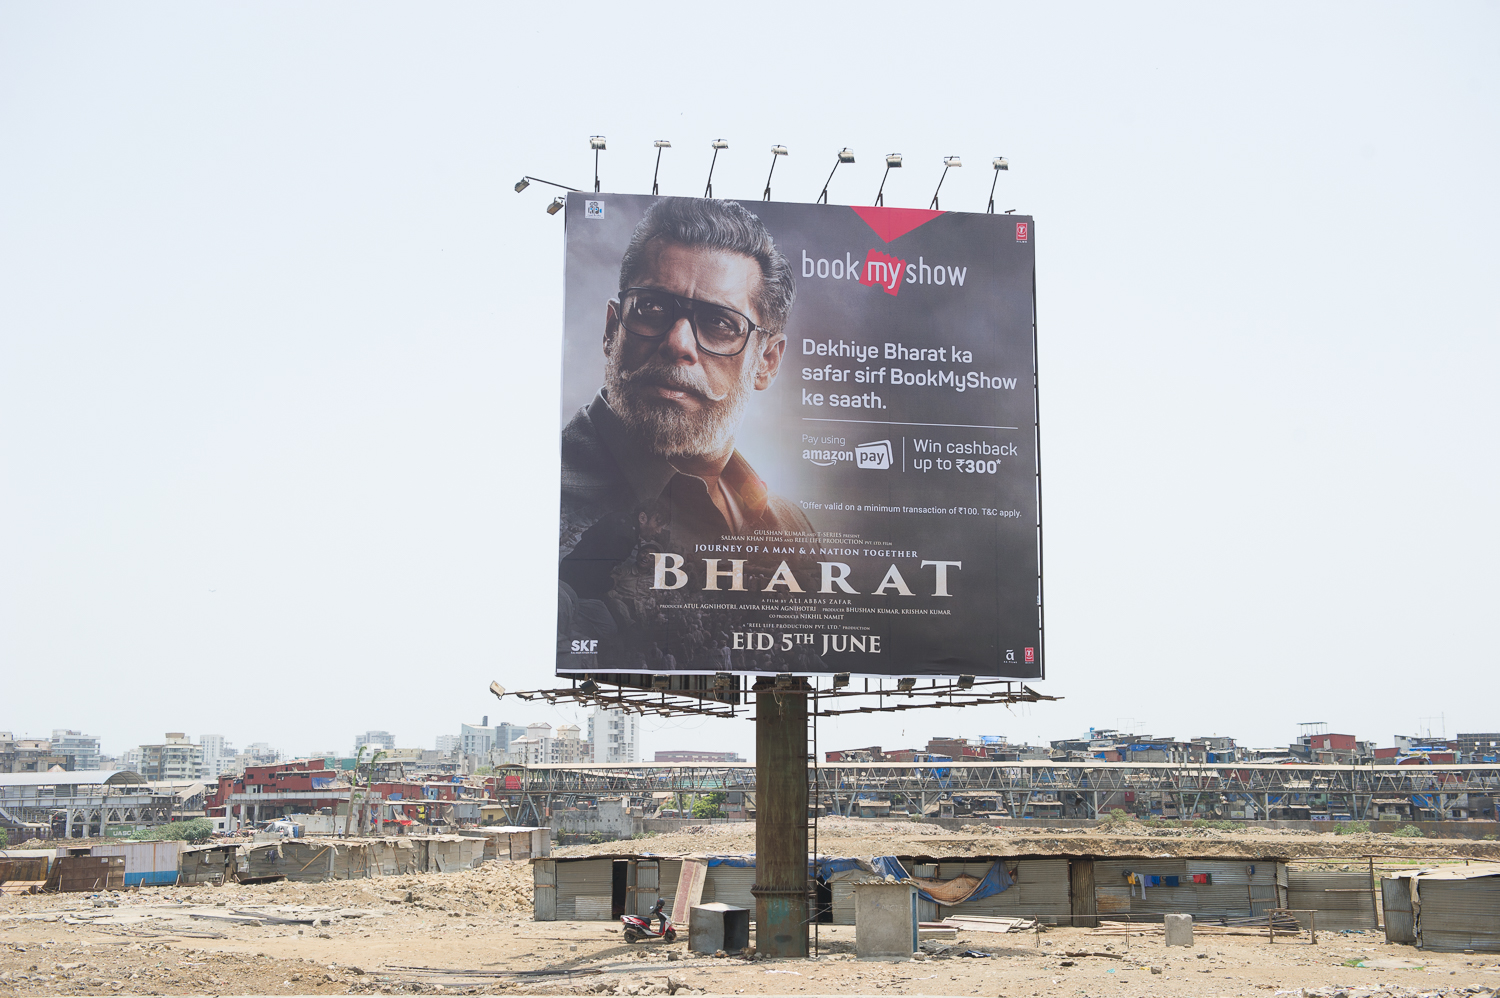  Advertisment Board near Dharavi slums, Mumbai, 2019 